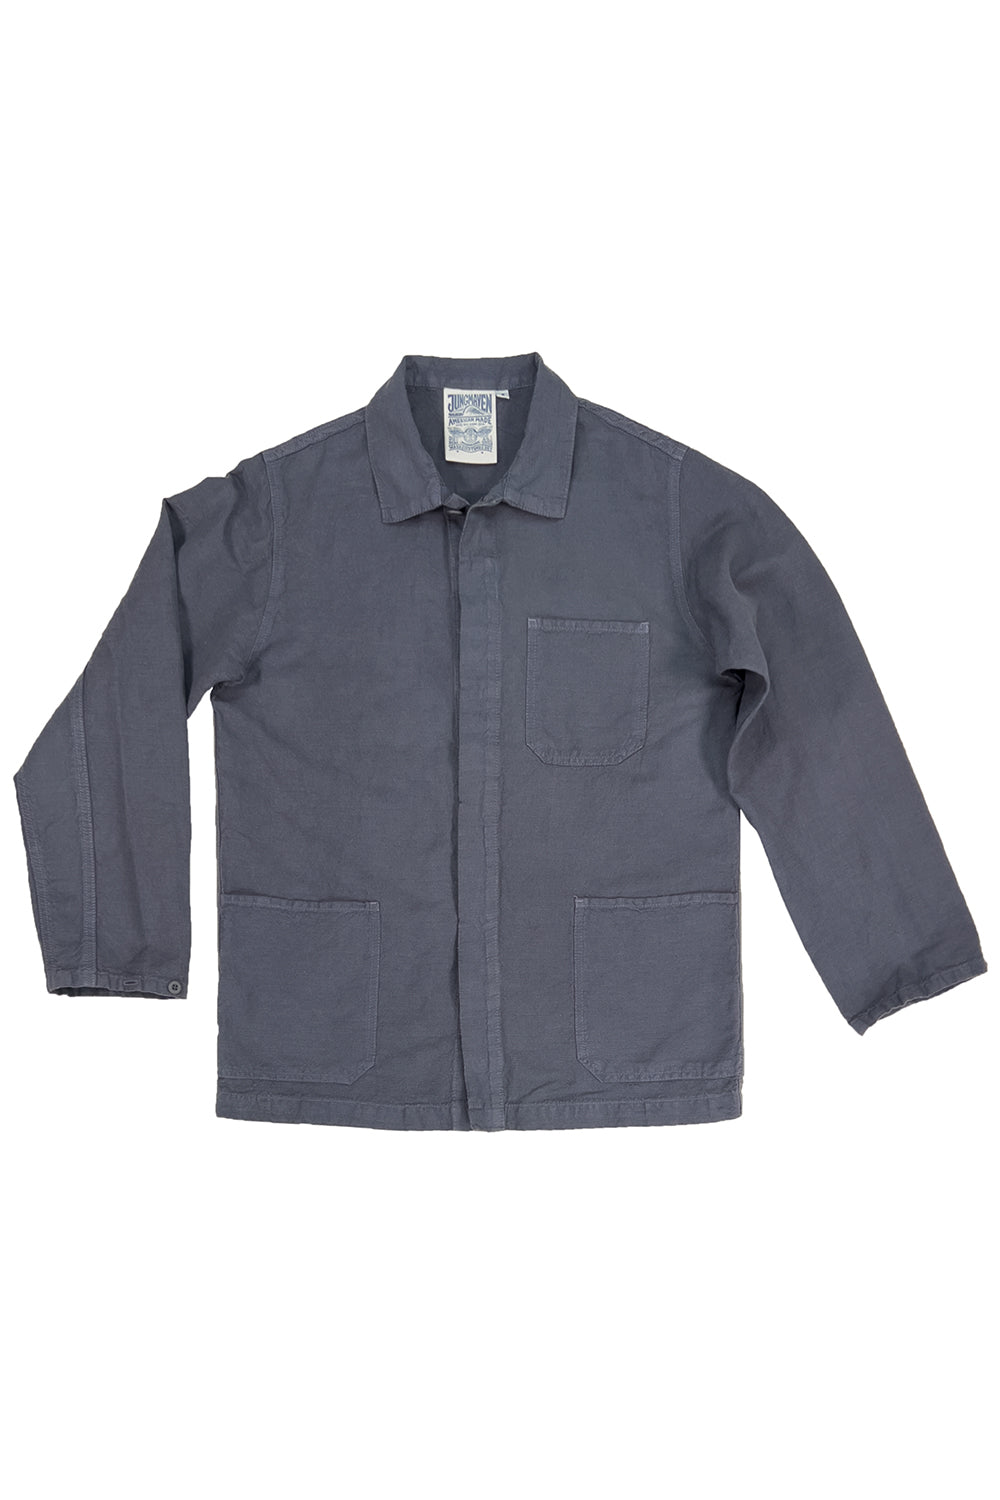 Cascade Jacket | Jungmaven Hemp Clothing & Accessories / Color: Diesel